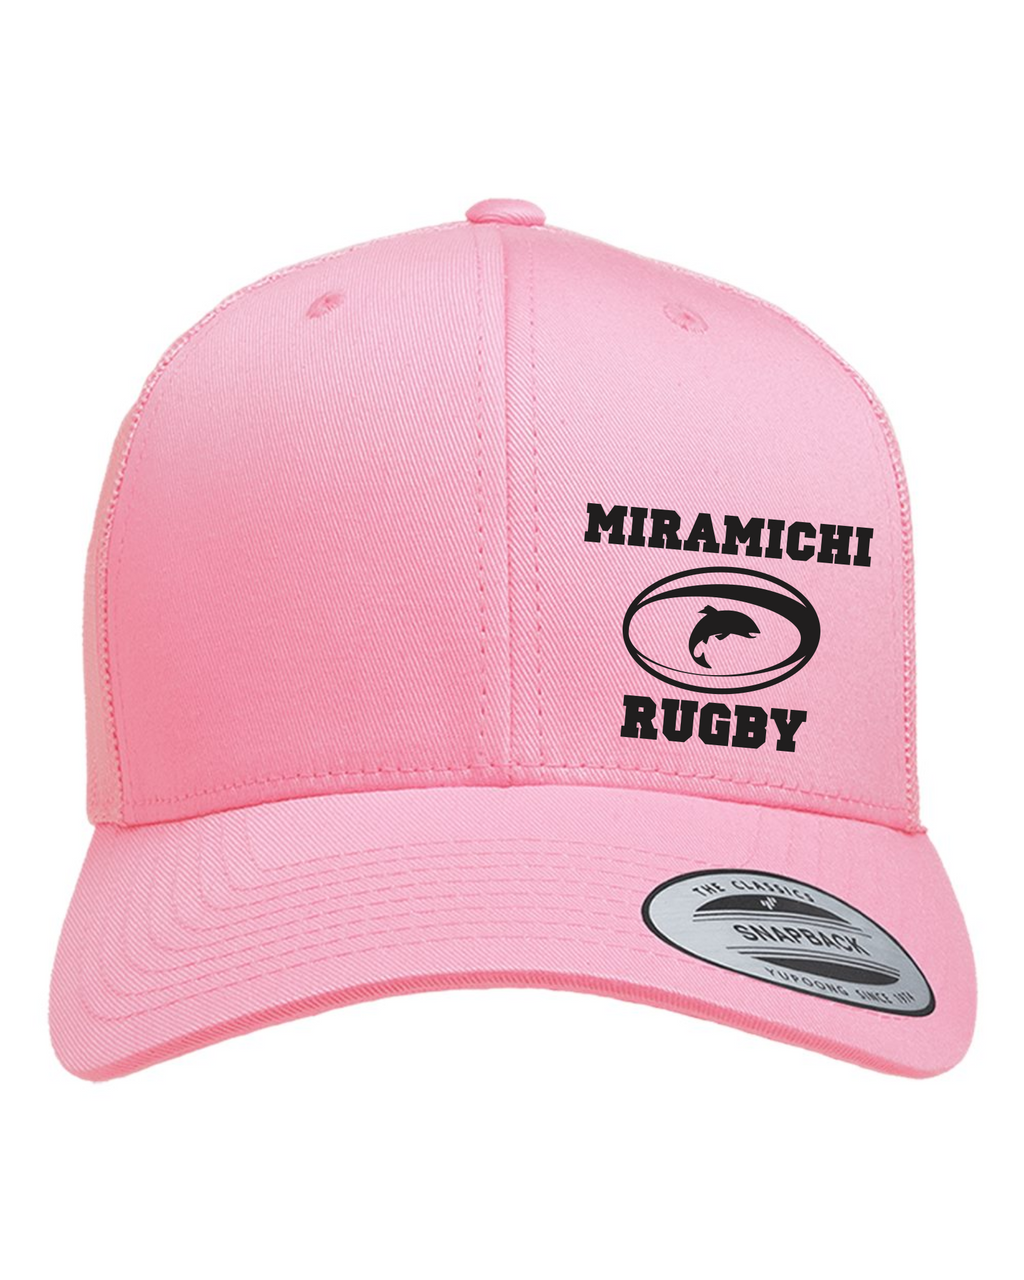 Miramichi Rugby - Pink - Snapback Hat